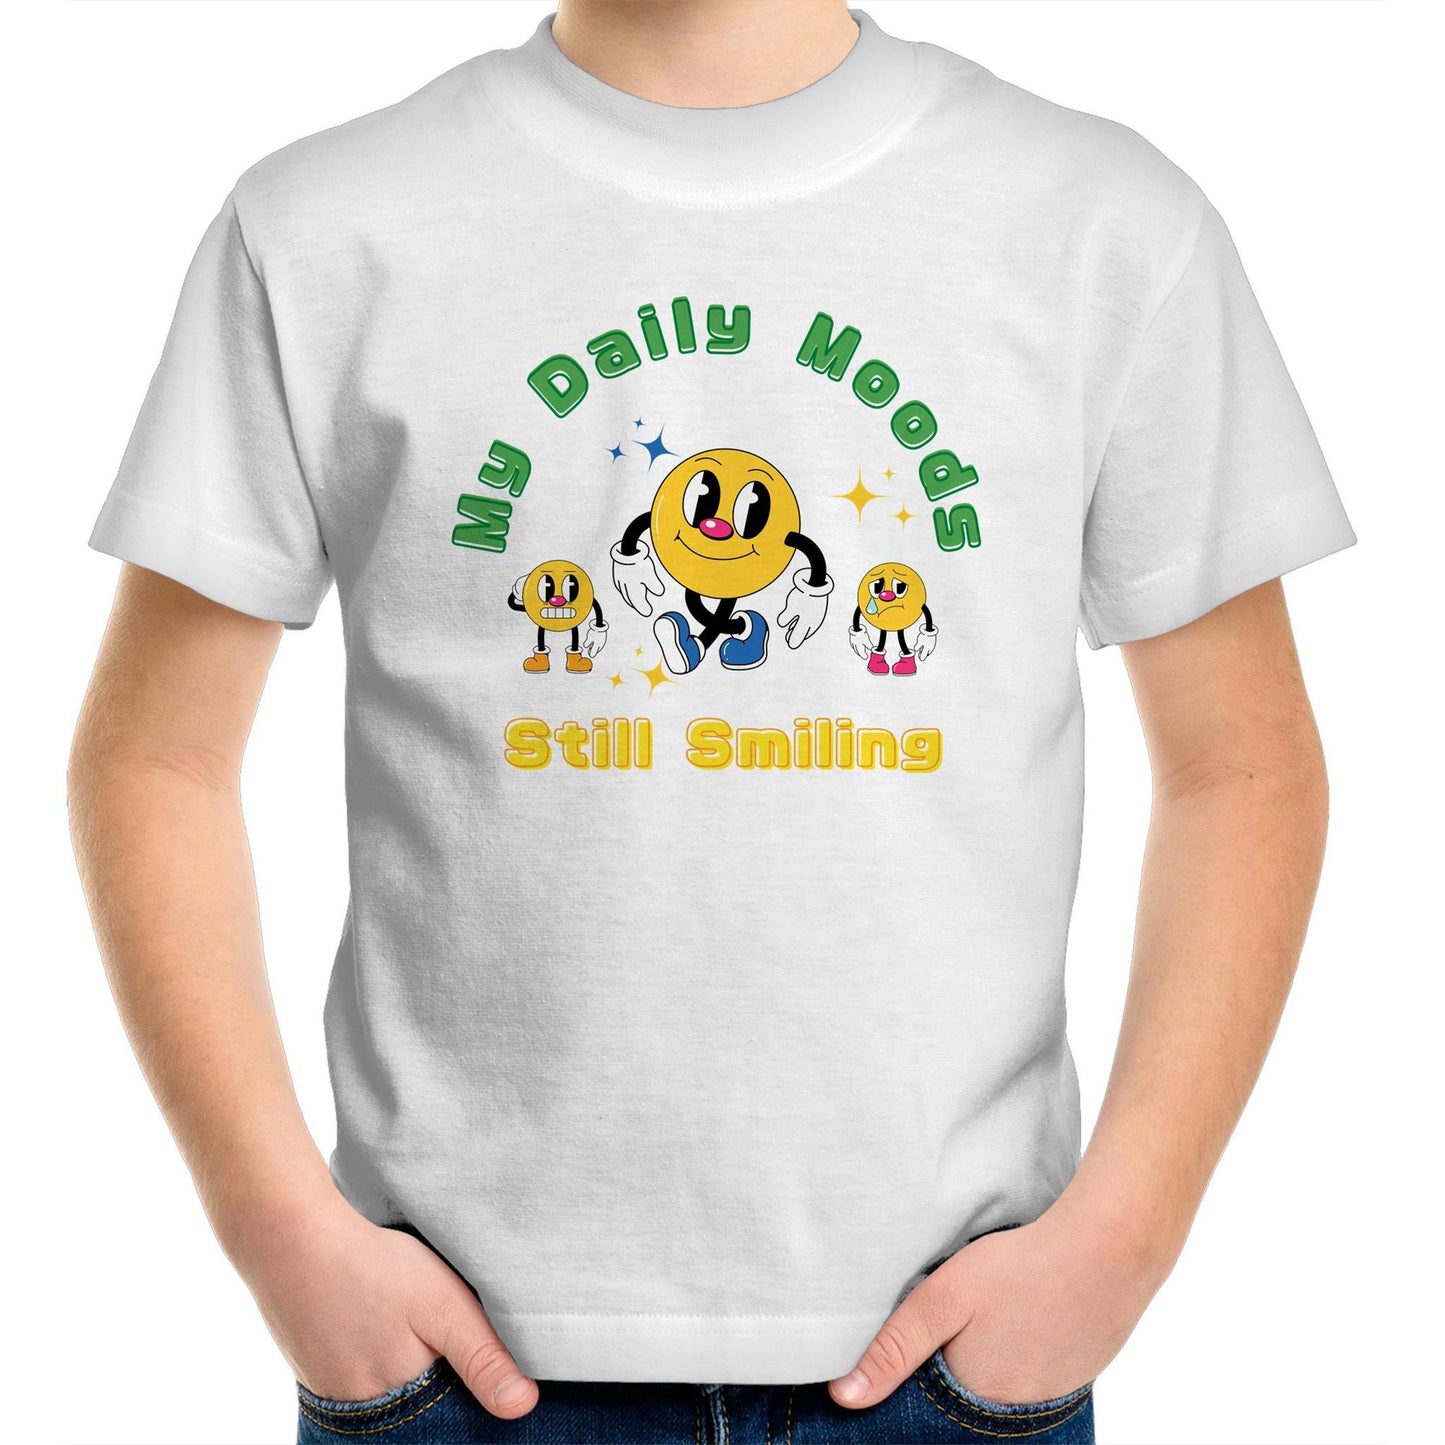 My Daily Moods - Kids Youth Crew T-Shirt White Kids Youth T-shirt